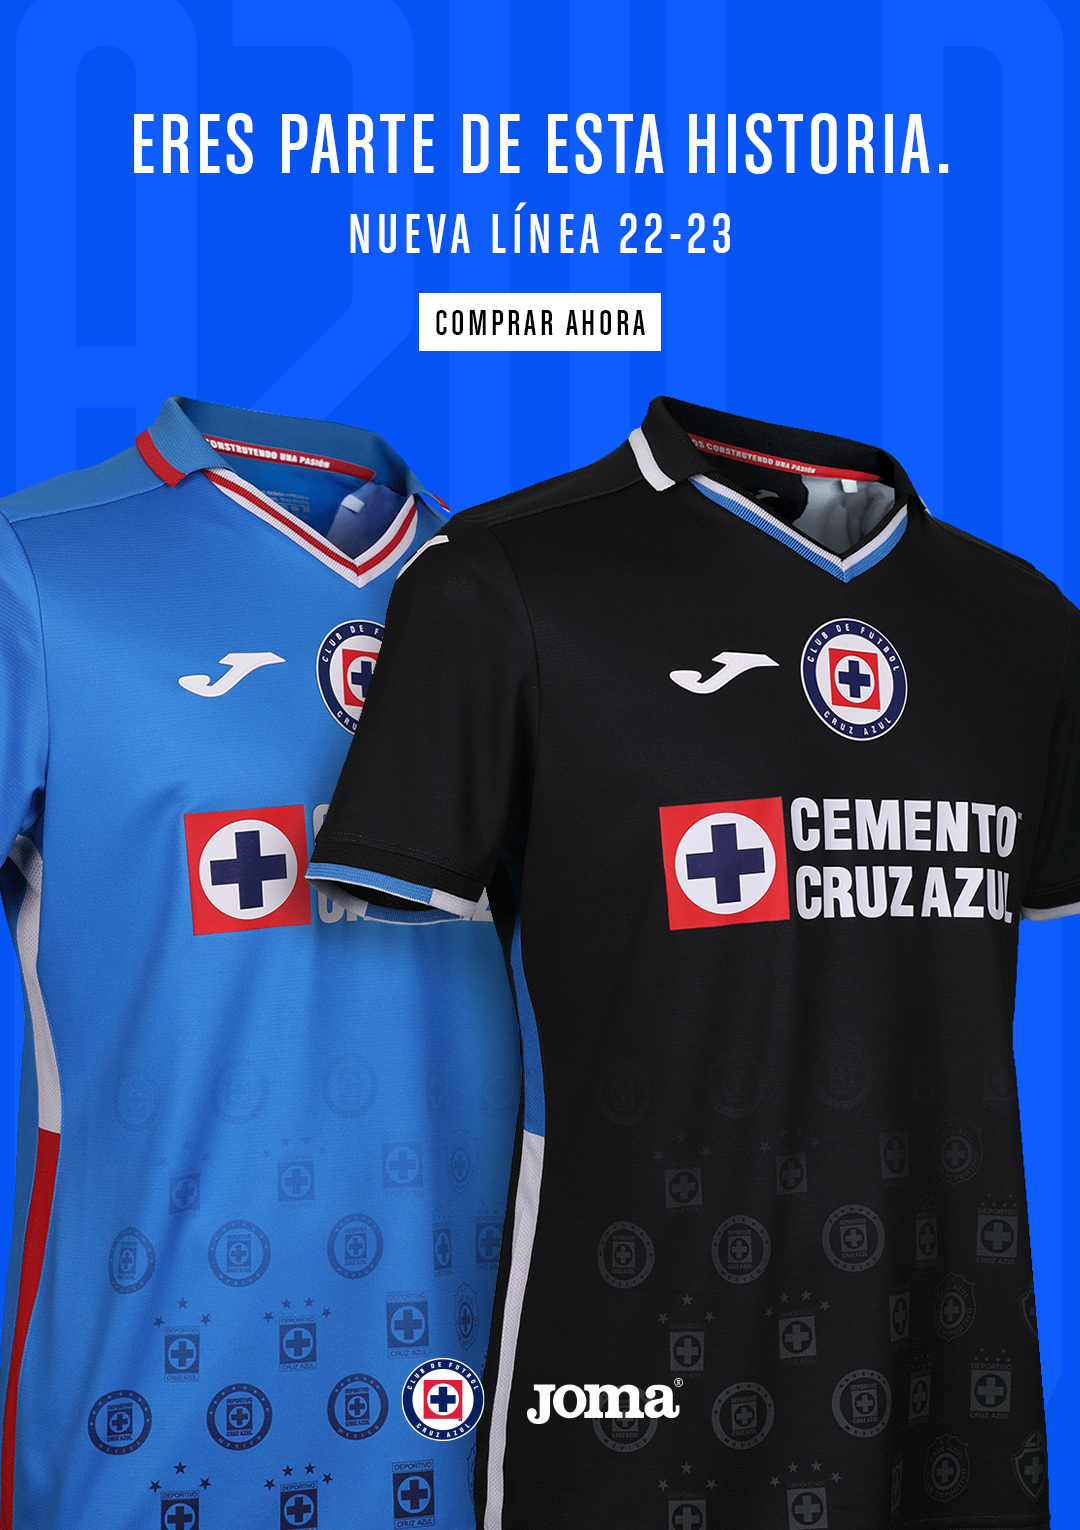 Club de Futbol Cruz Azul | Azul de por vida